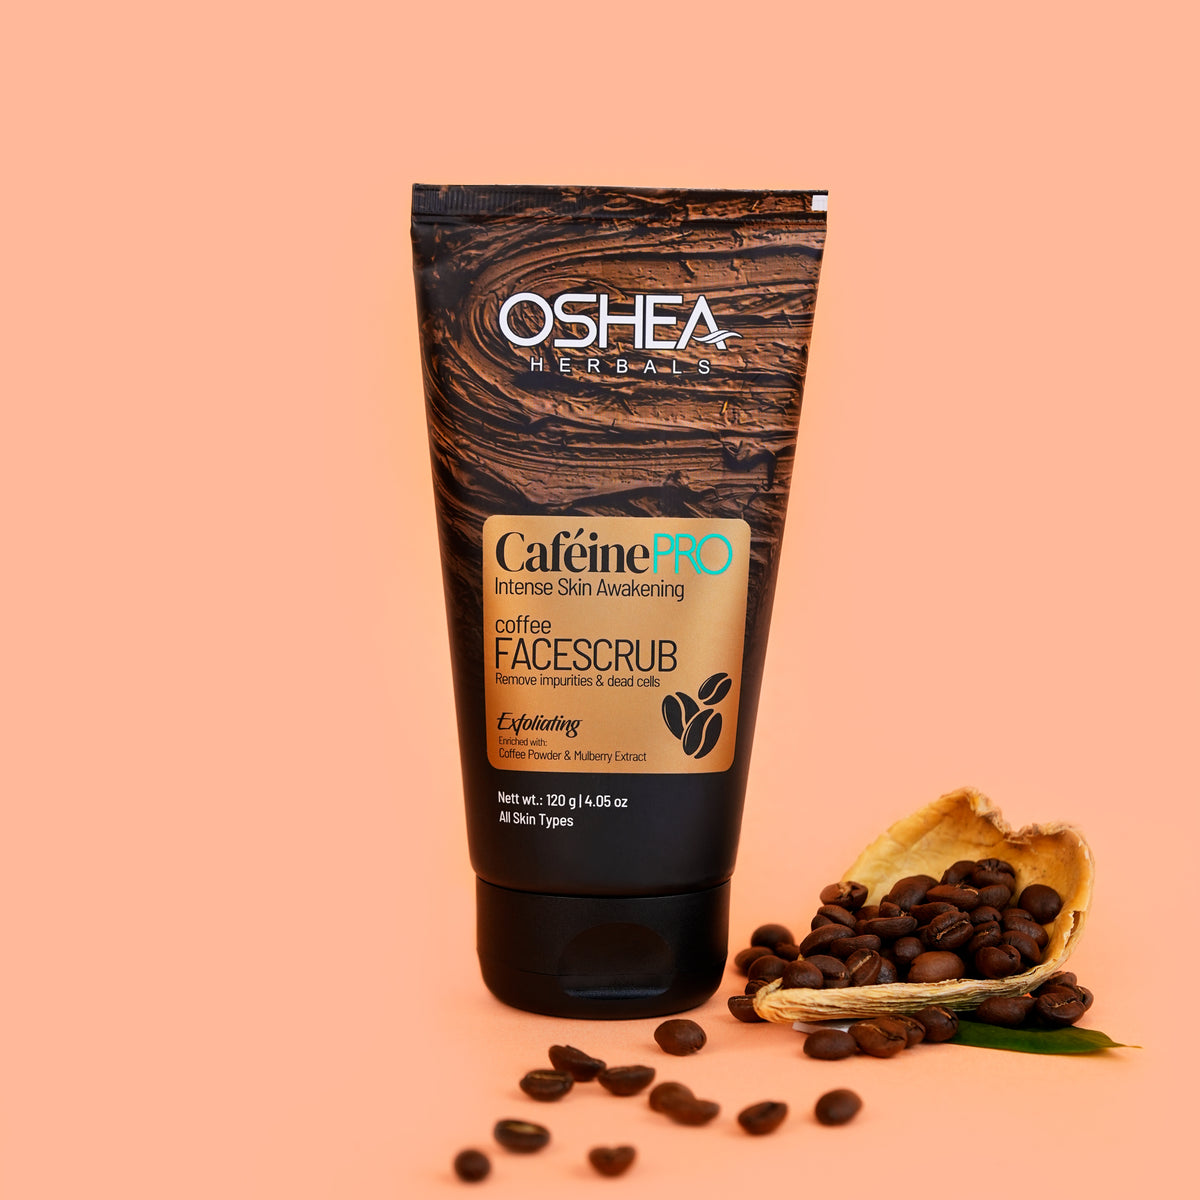 Cafeine-Pro Face Scrub Oshea Herbals